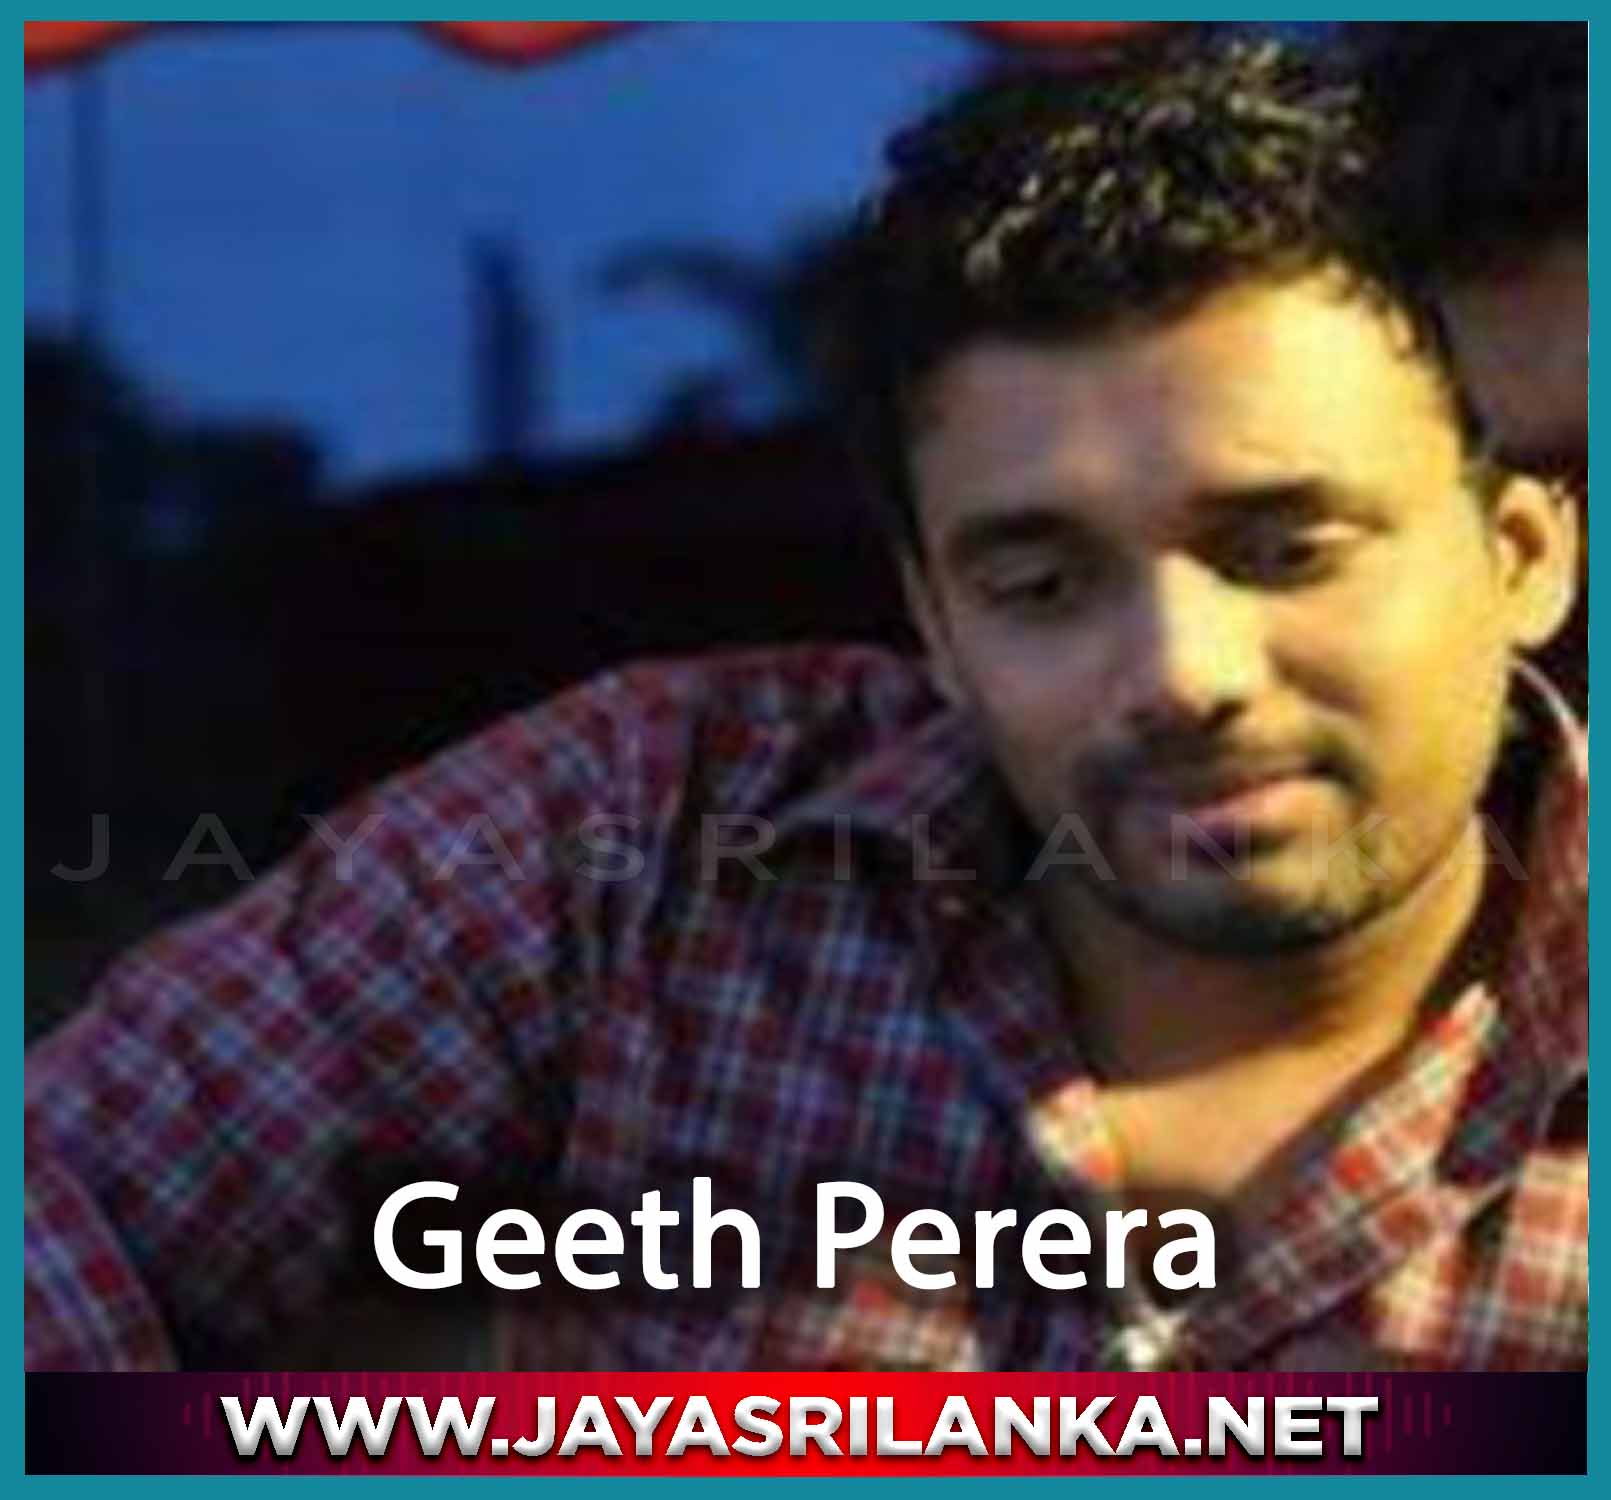 Dotha Pa Mage Dethata - Geeth Perera mp3 Image